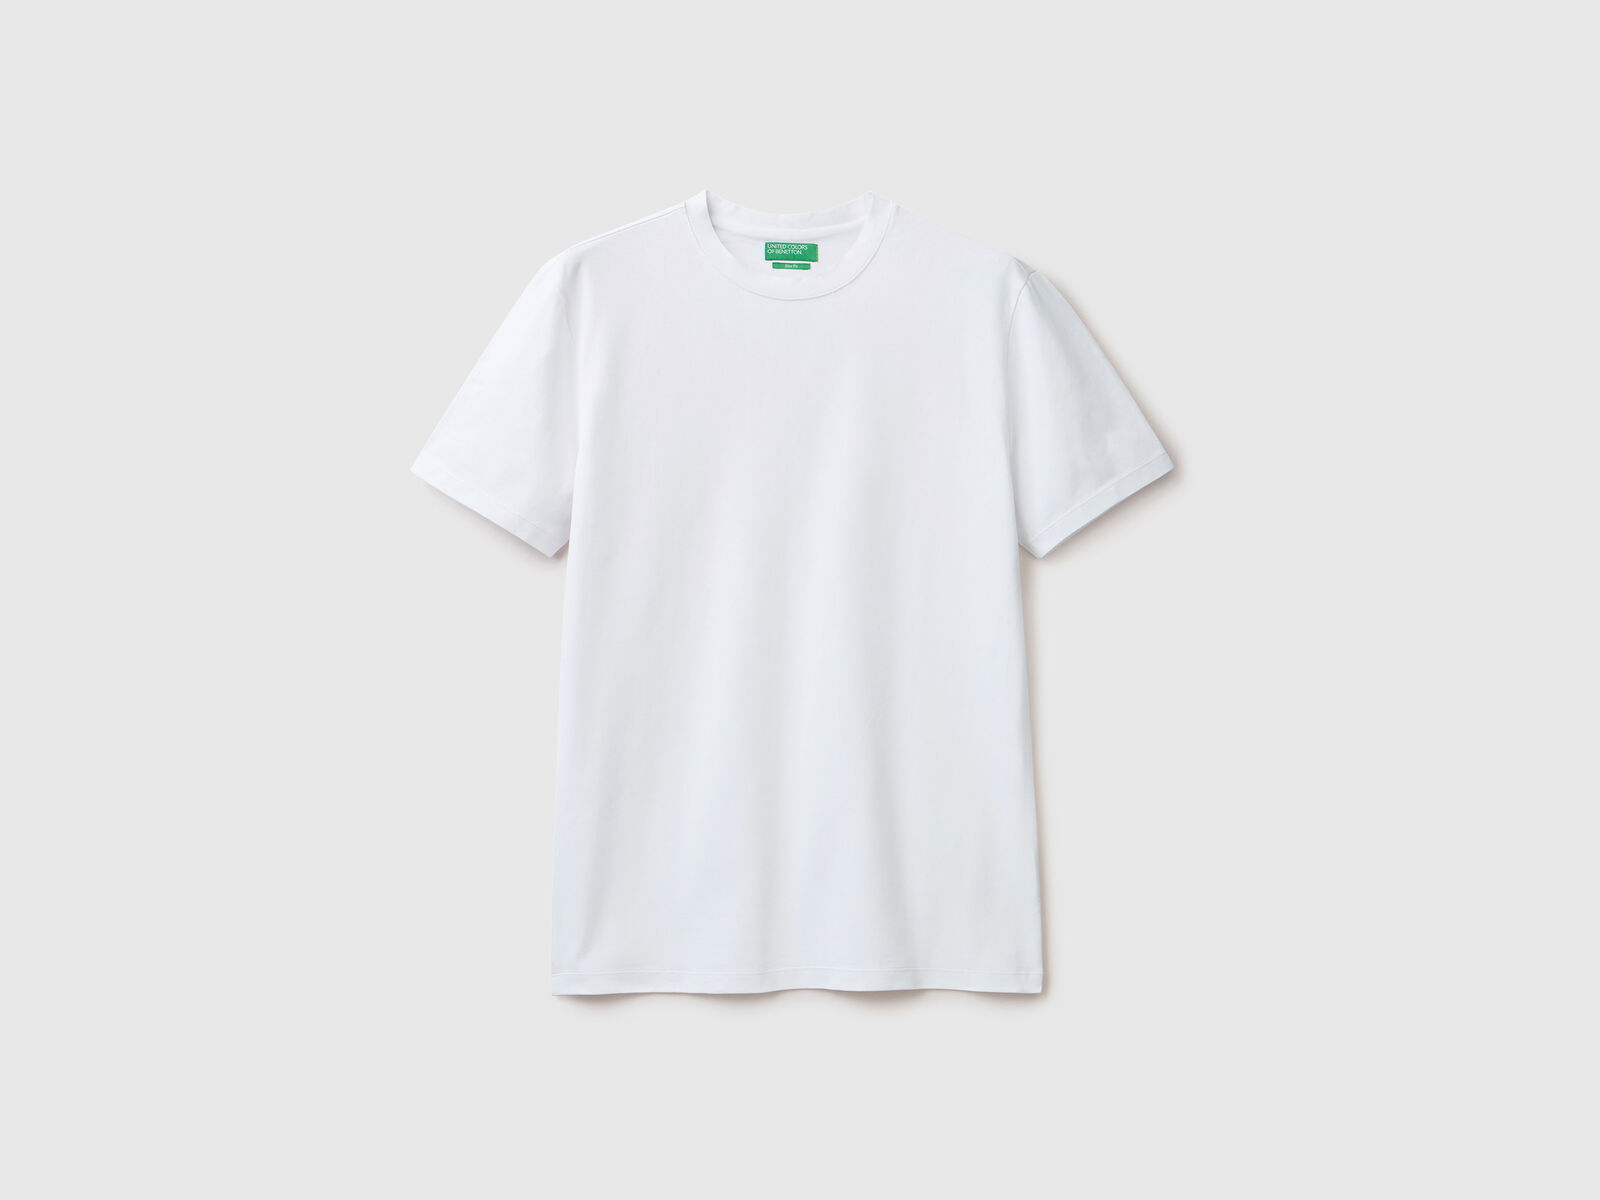 - | Benetton stretch fit t-shirt in Slim White cotton